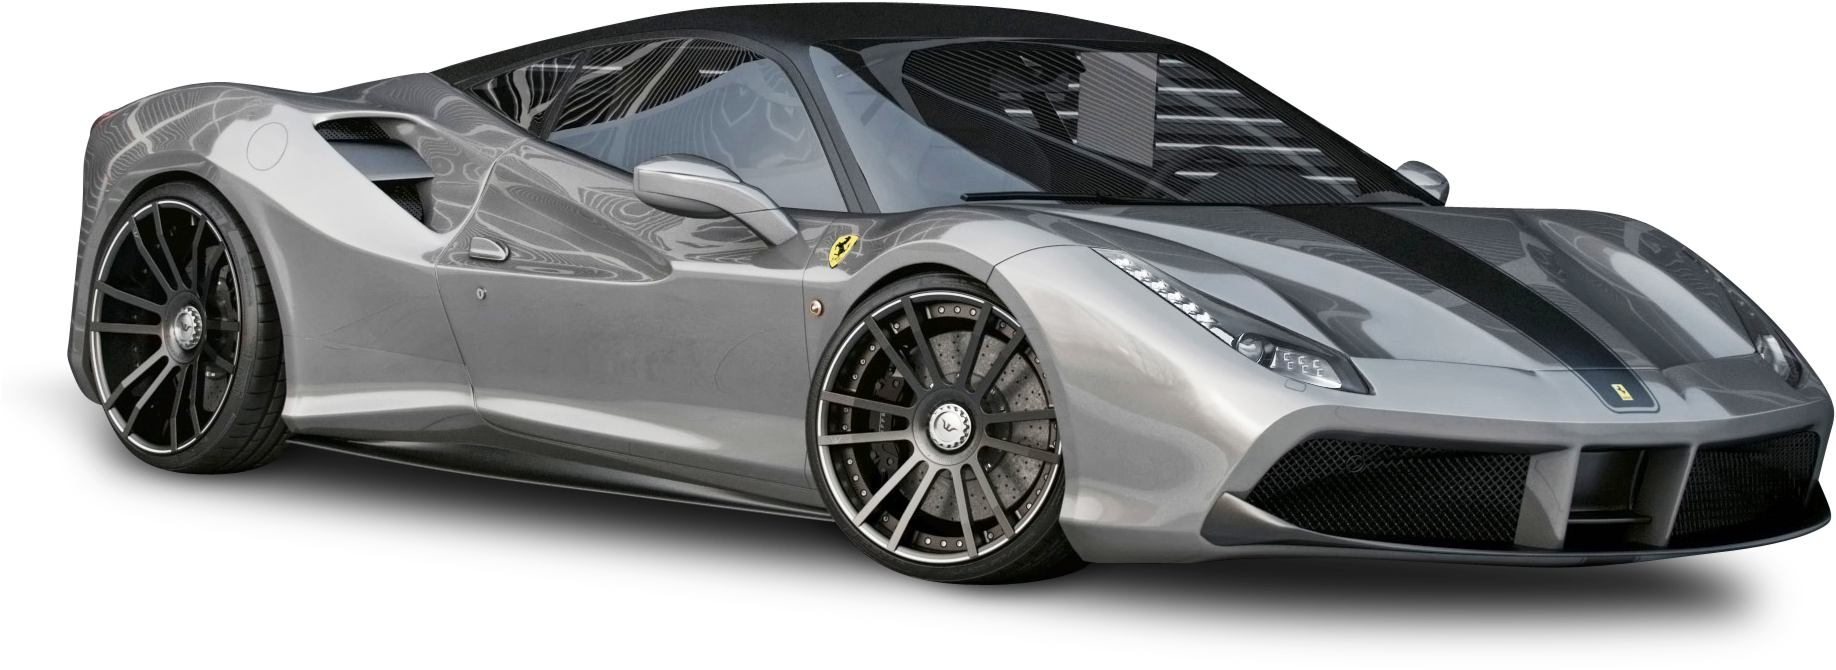 Silver Ferrari Sports Car